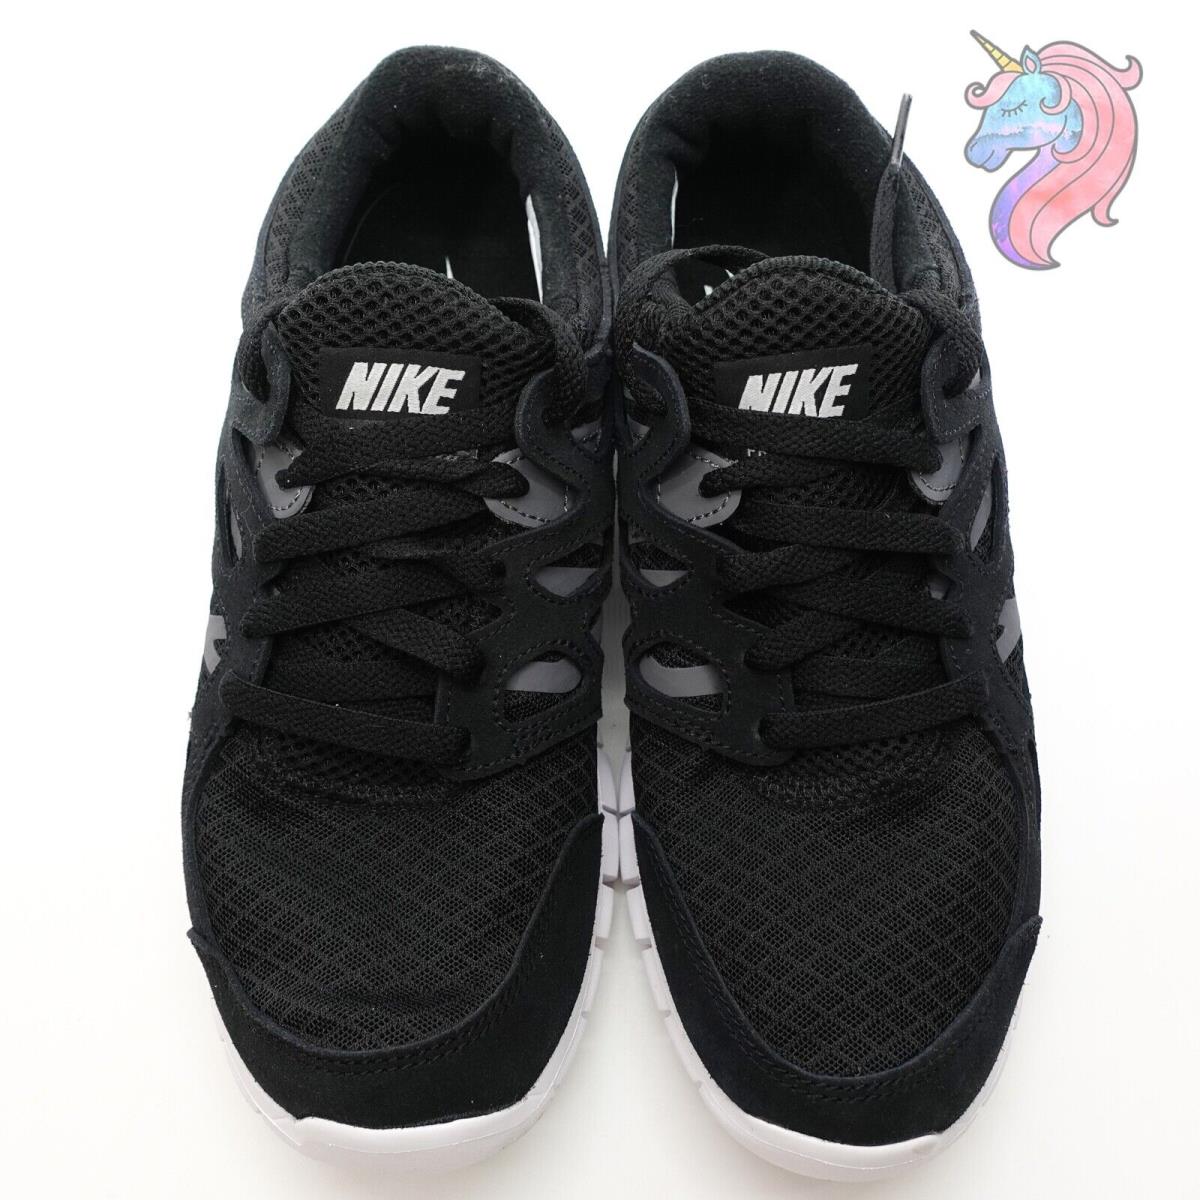 Nike shoes Free Run - Black, White 4